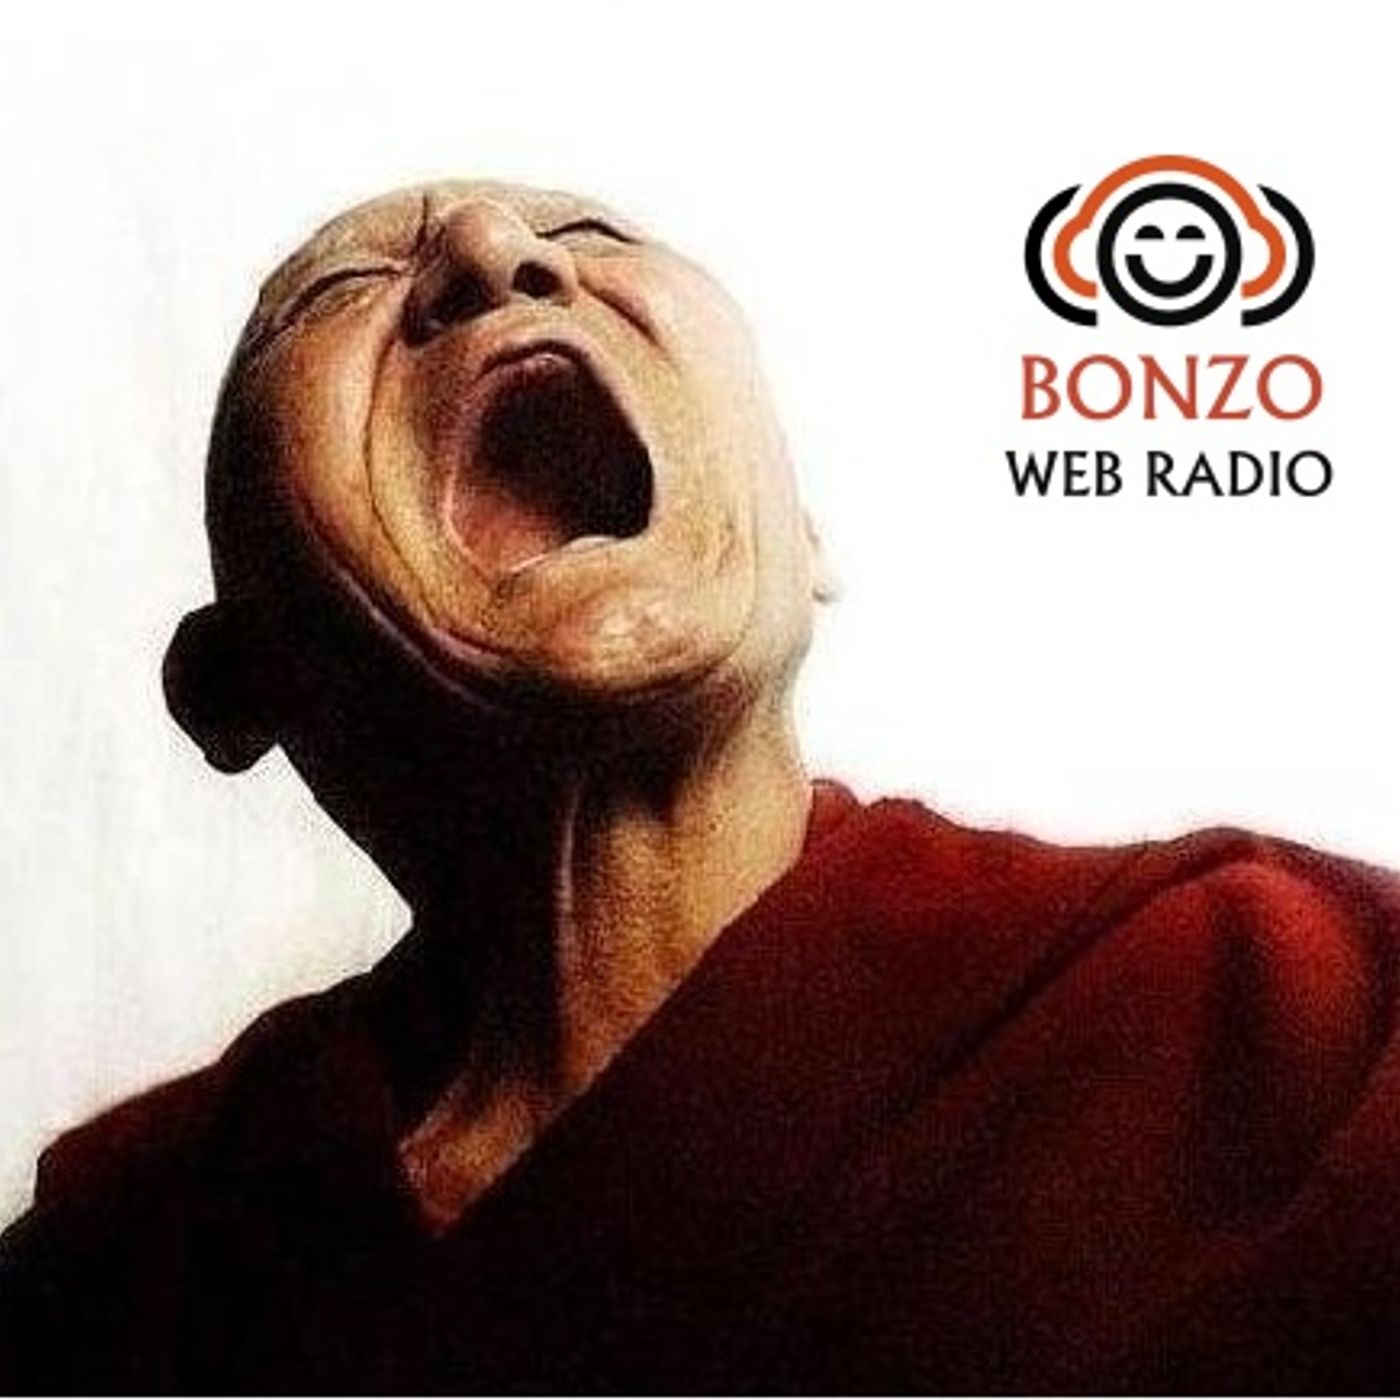 Bonzo Web Radio